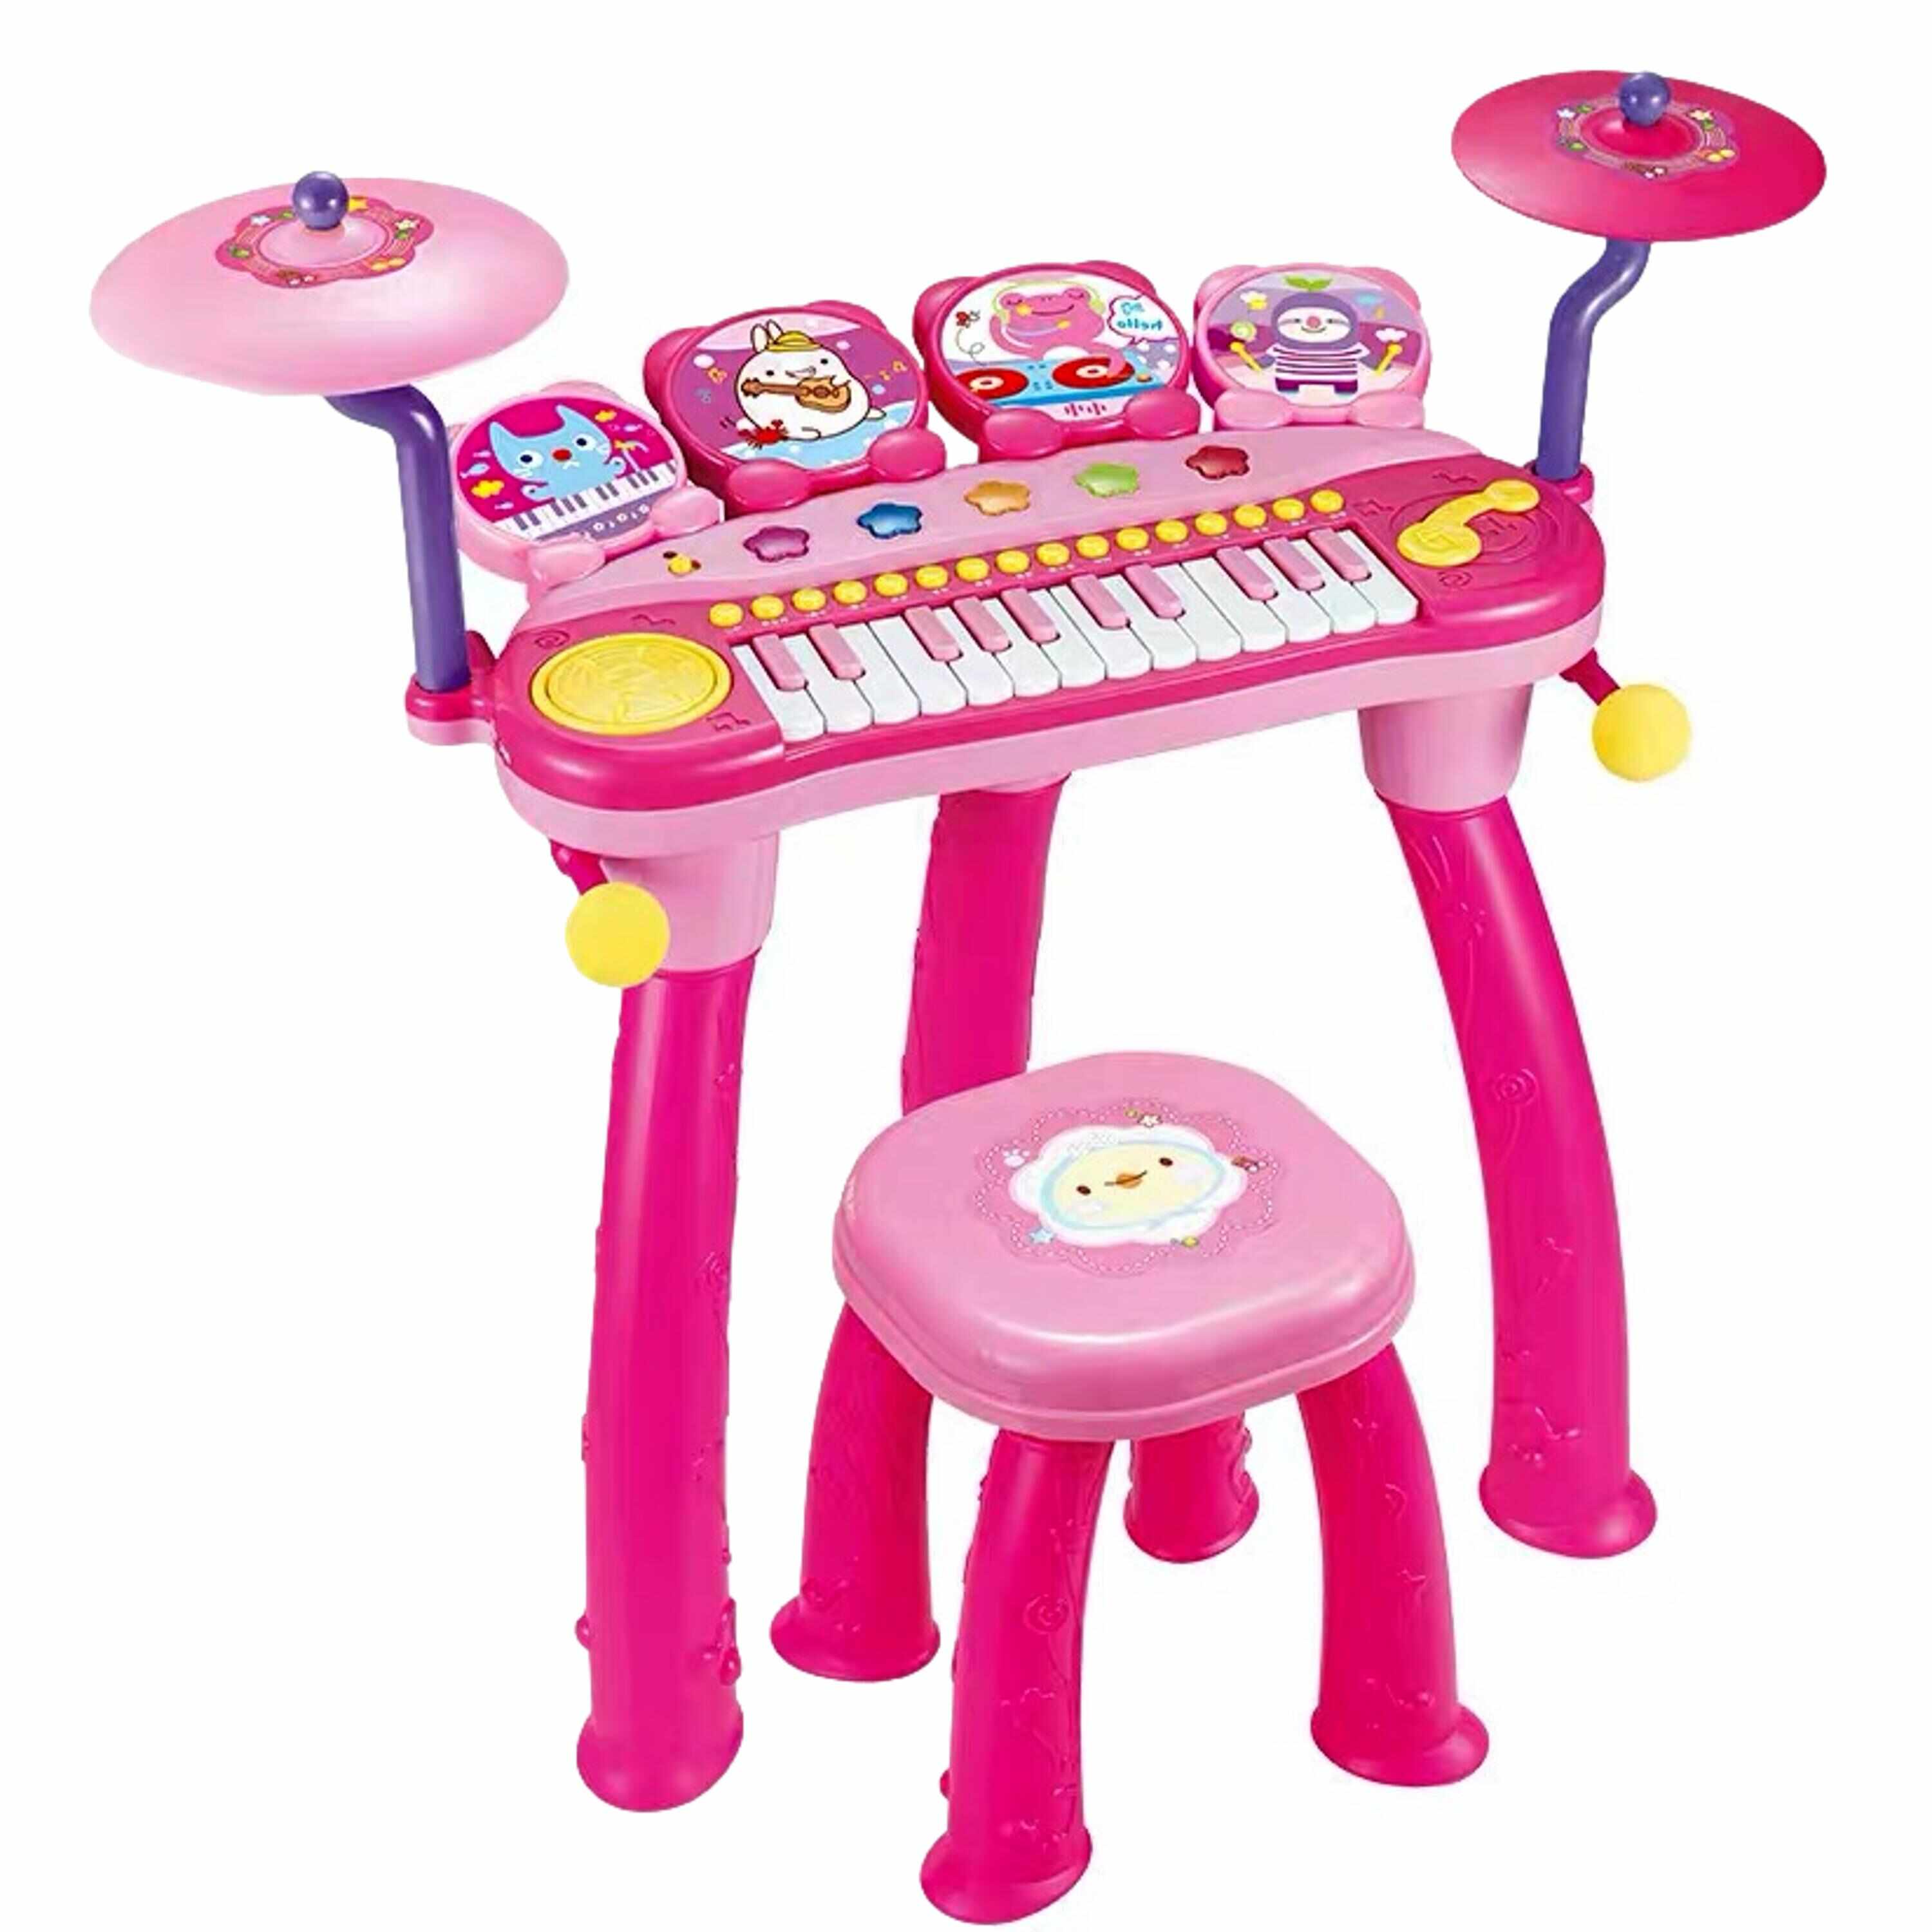 Orga muzicala pentru copii, diverse functii, Model Animalute, scaunel inclus, Roz